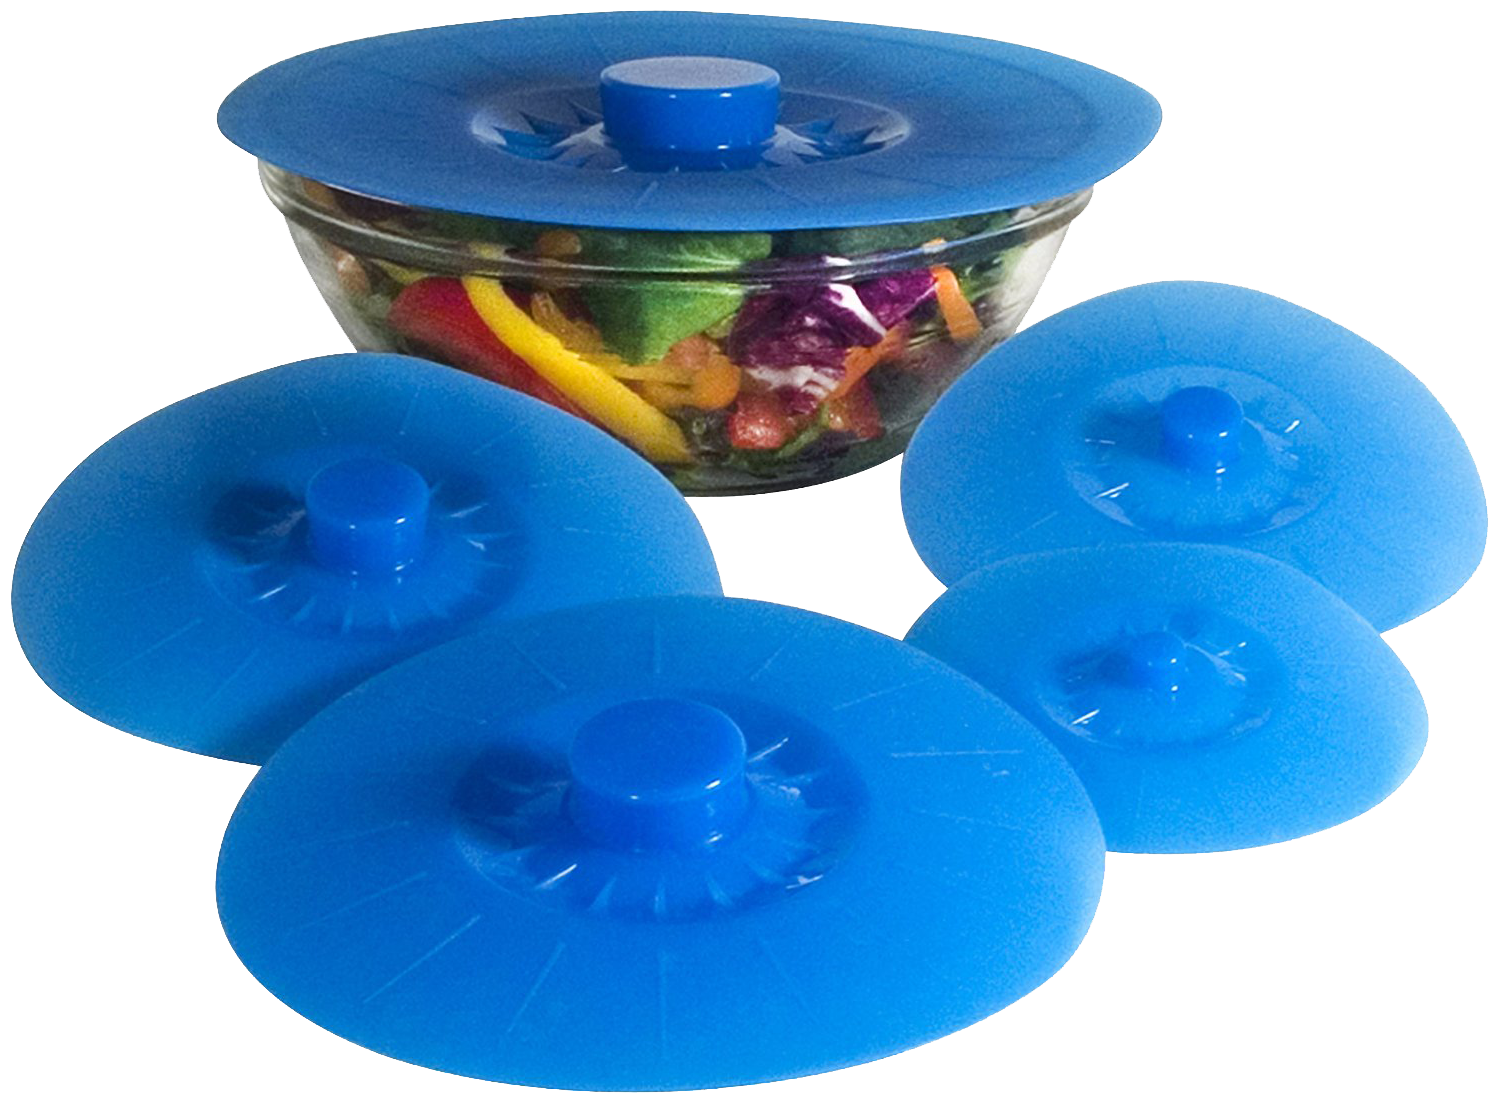 7 Pack Silicone Lids, Microwave Splatter Cover, 5 Sizes Reusable Heat  Resistant Food Suction Lids fits Cups, Bowls, Plates, Pots, Pans, Skillets